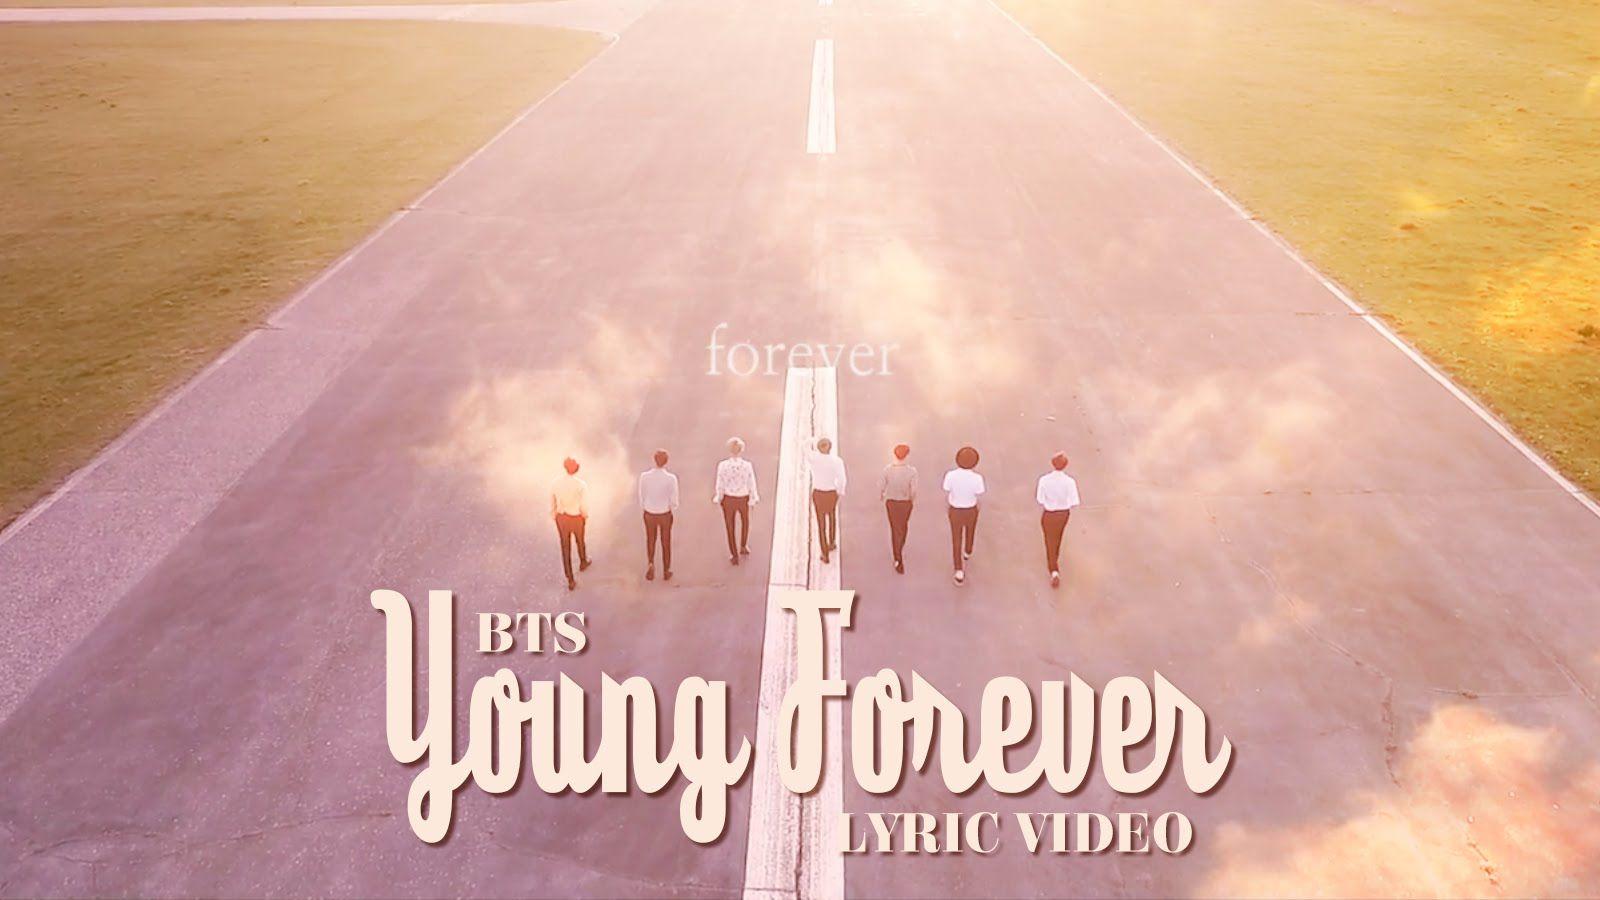 Обои на ноутбук BTS Forever young